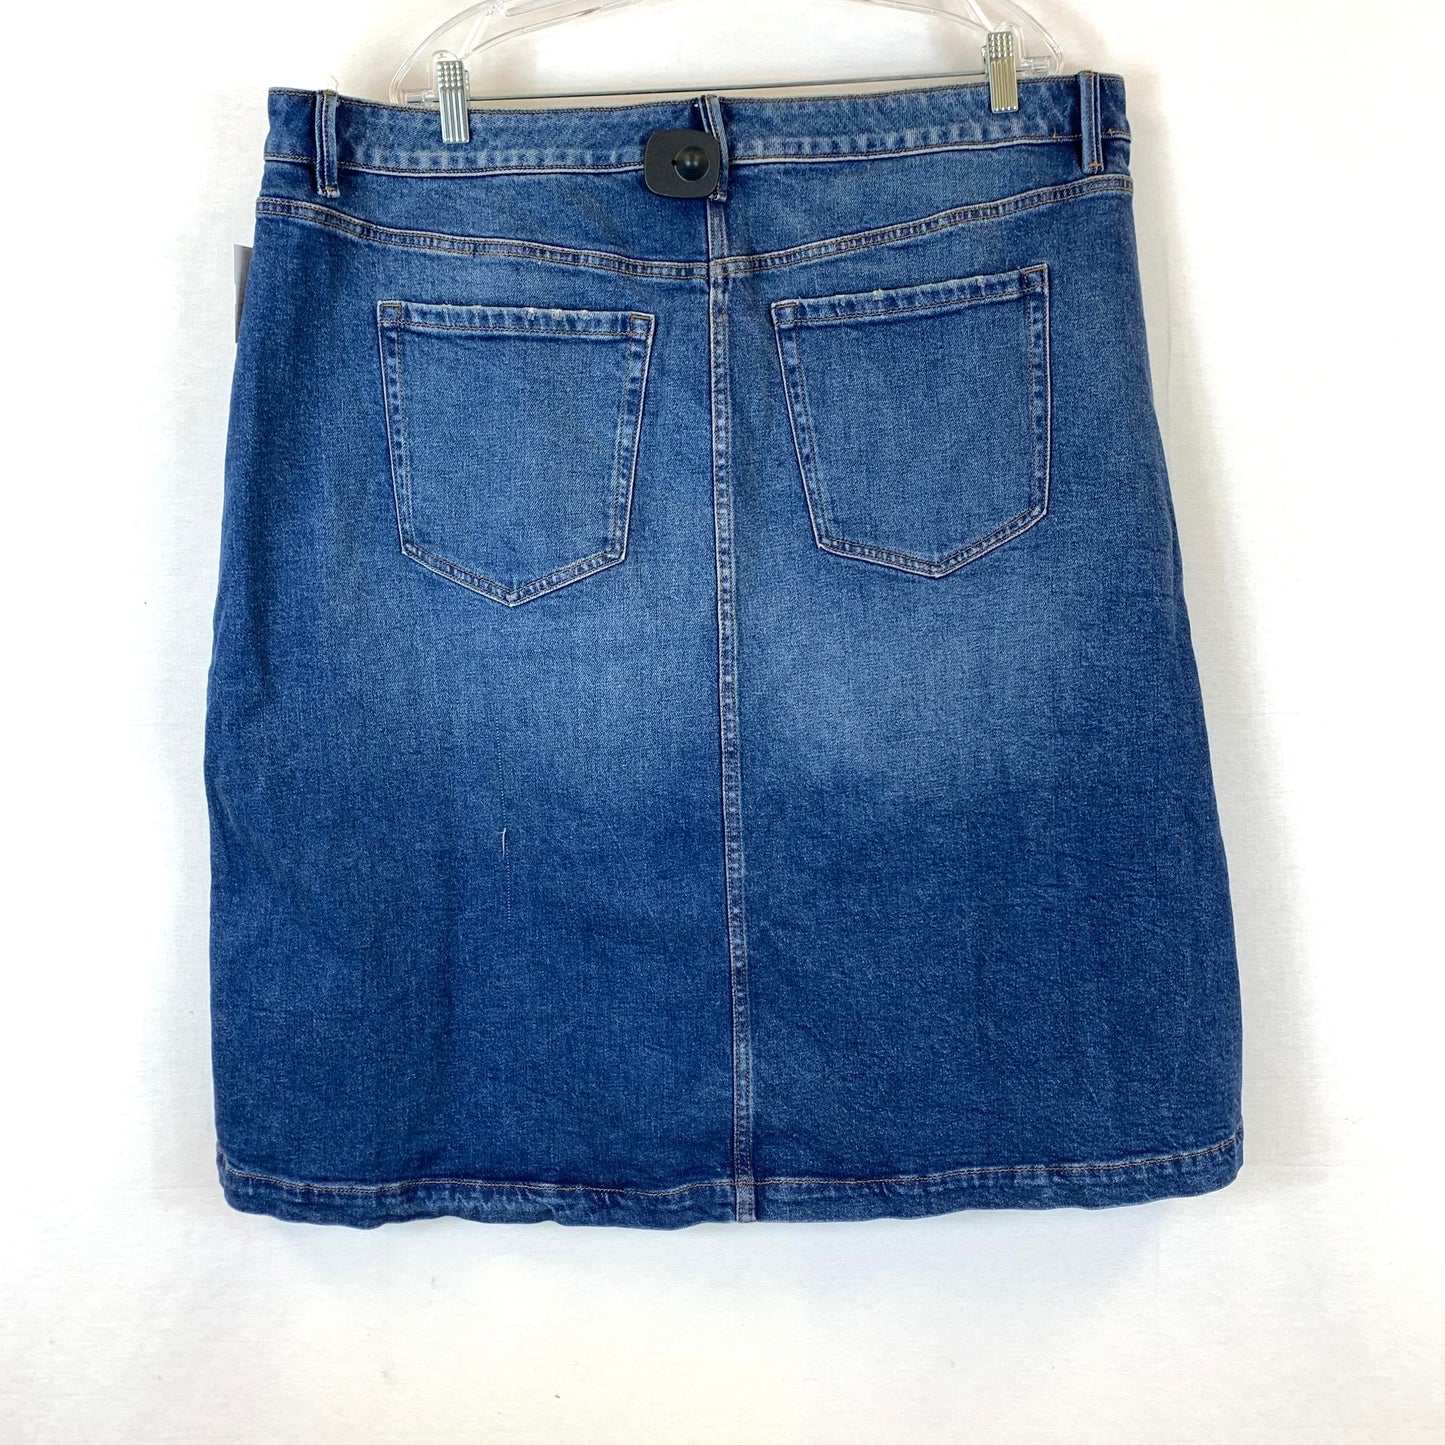 Skirt Mini & Short By Lane Bryant  Size: 3x